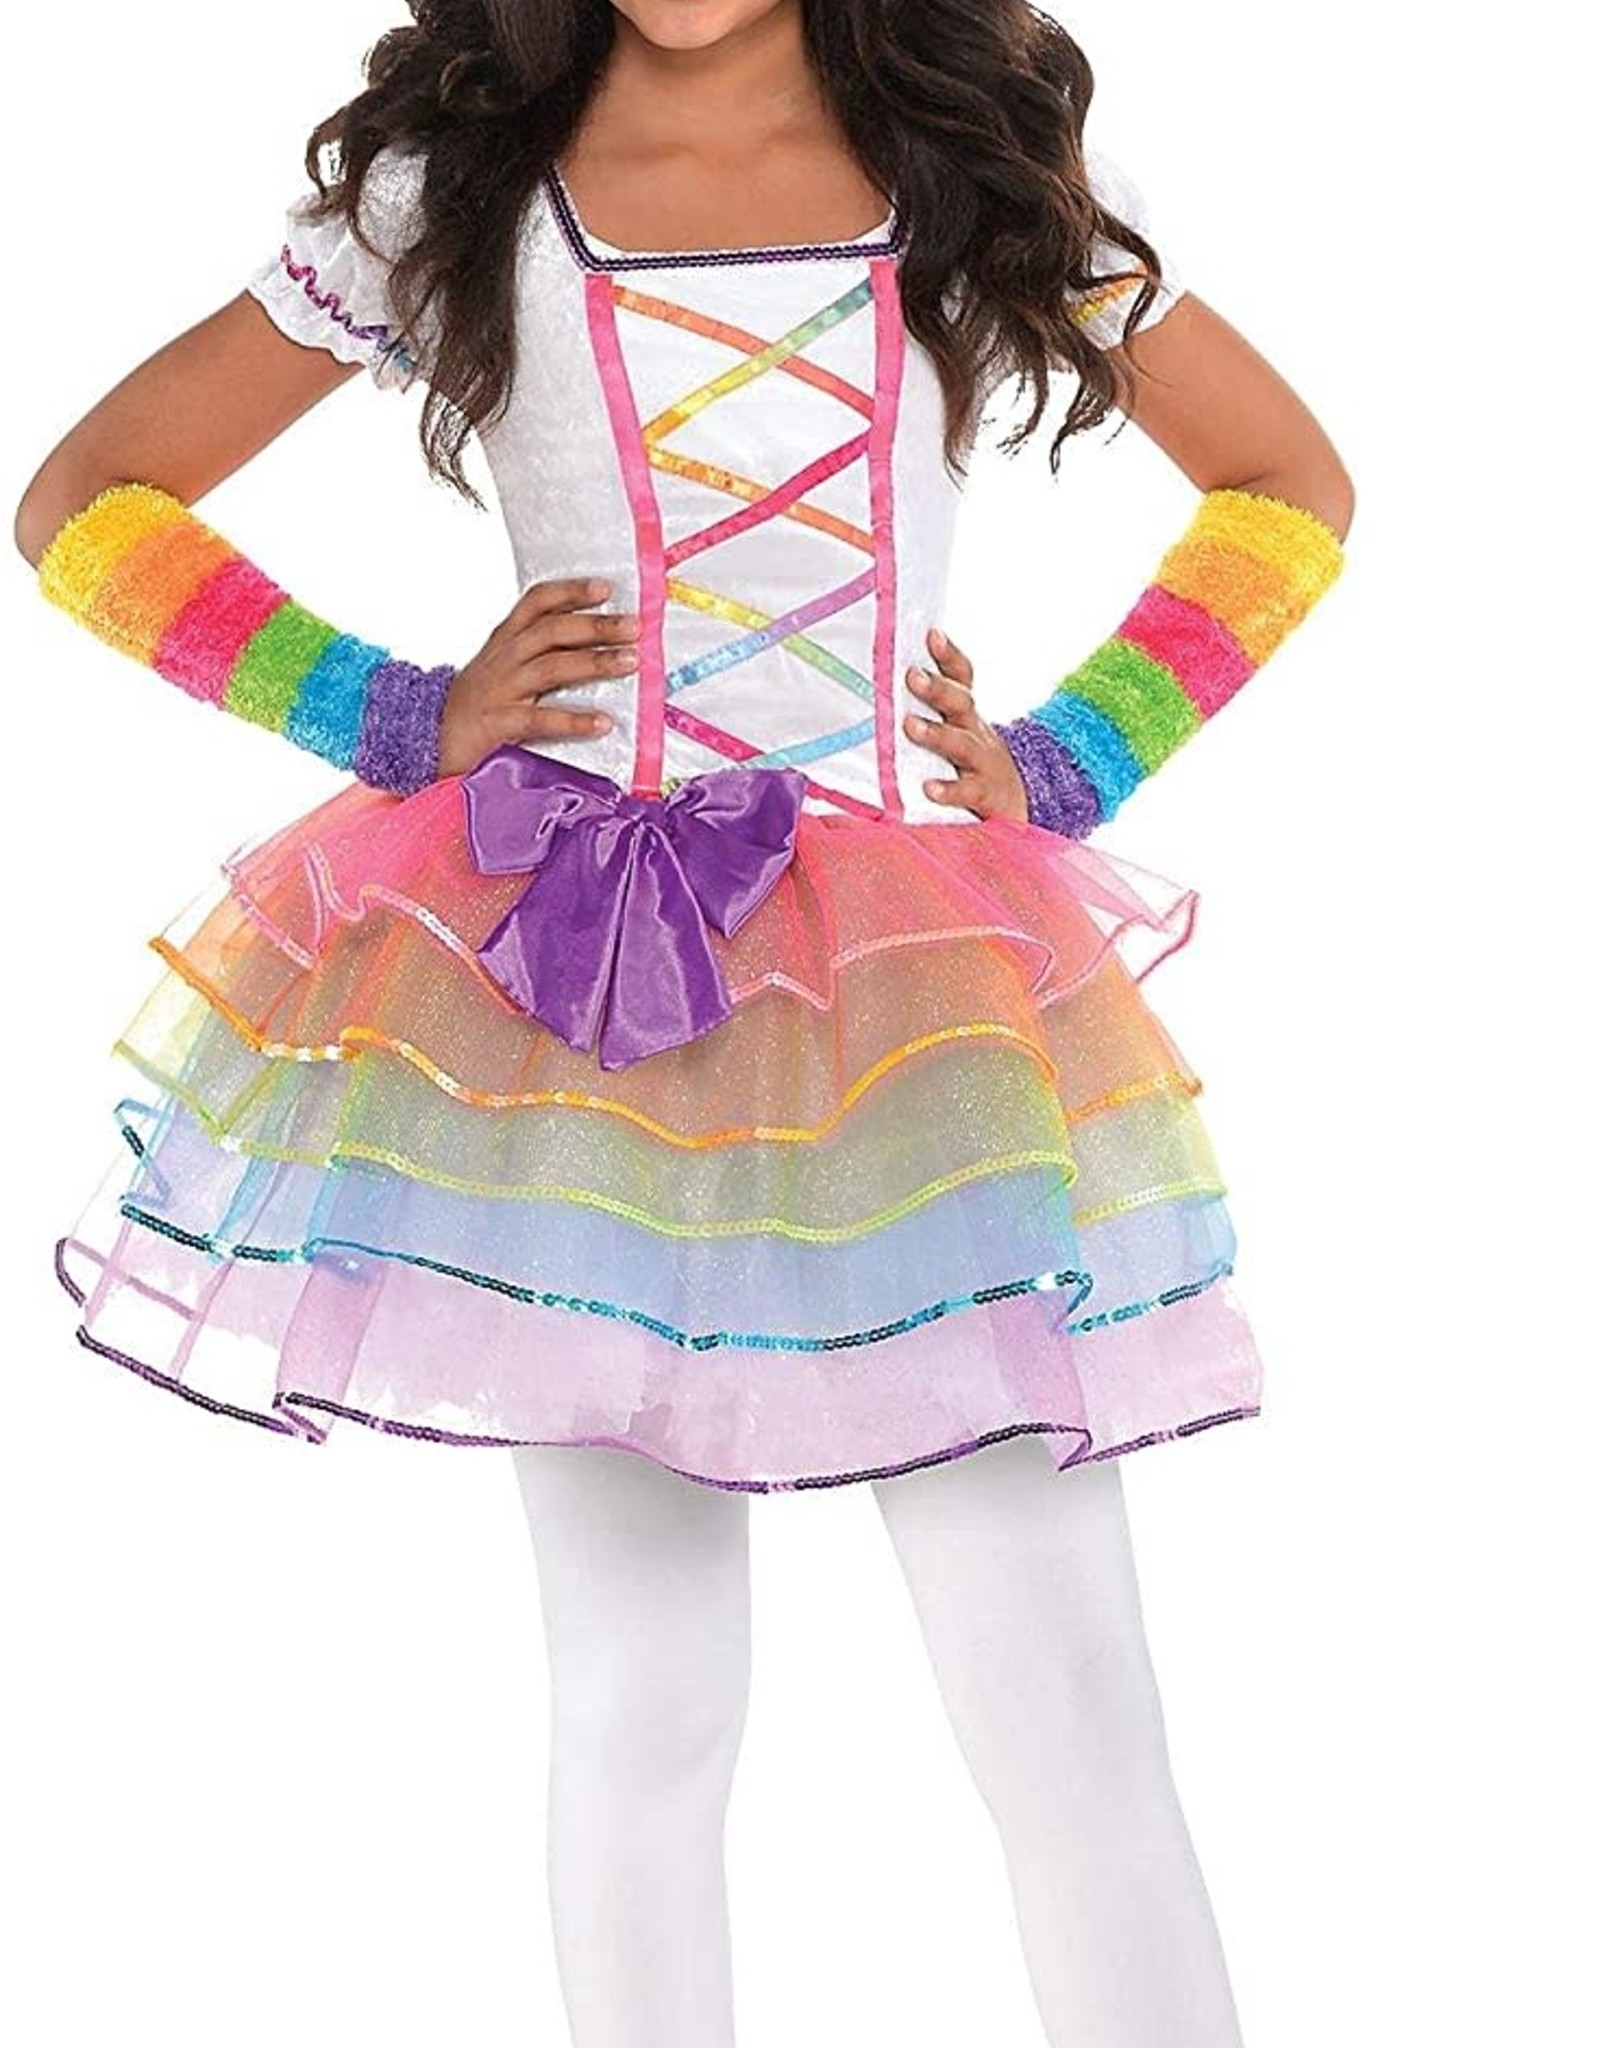 Rainbow Unicorn Girl Costume